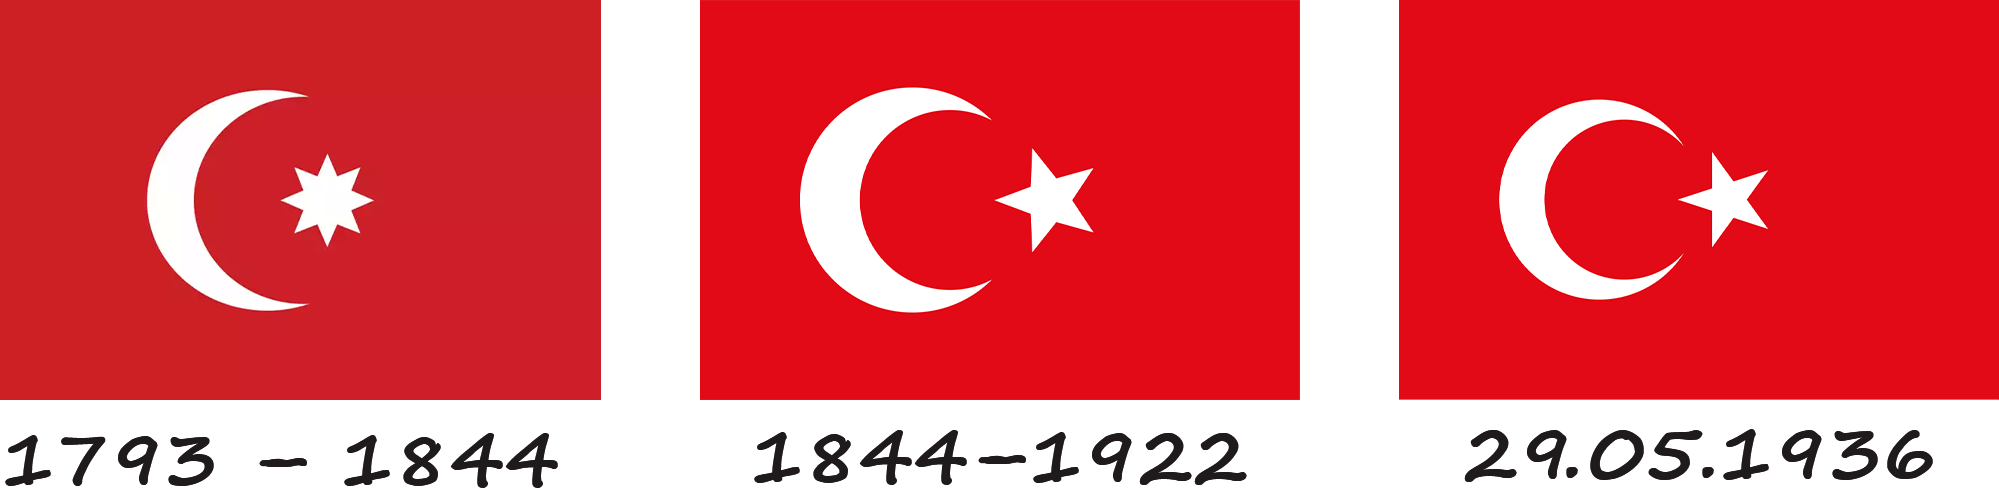 Historia de la bandera turca